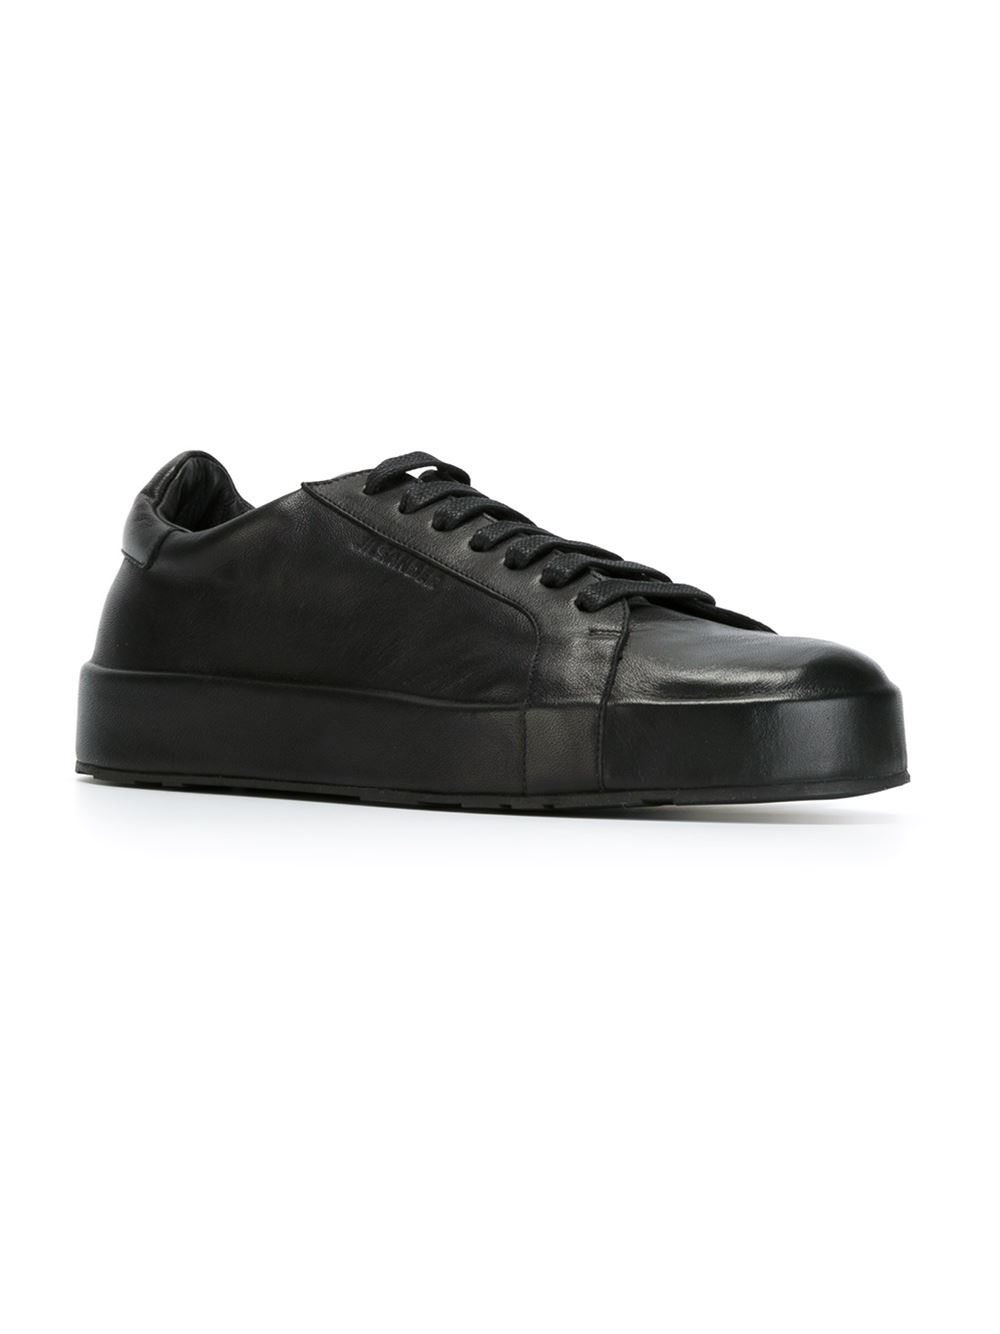 Lyst - Jil Sander Classic Low-top Sneakers in Black